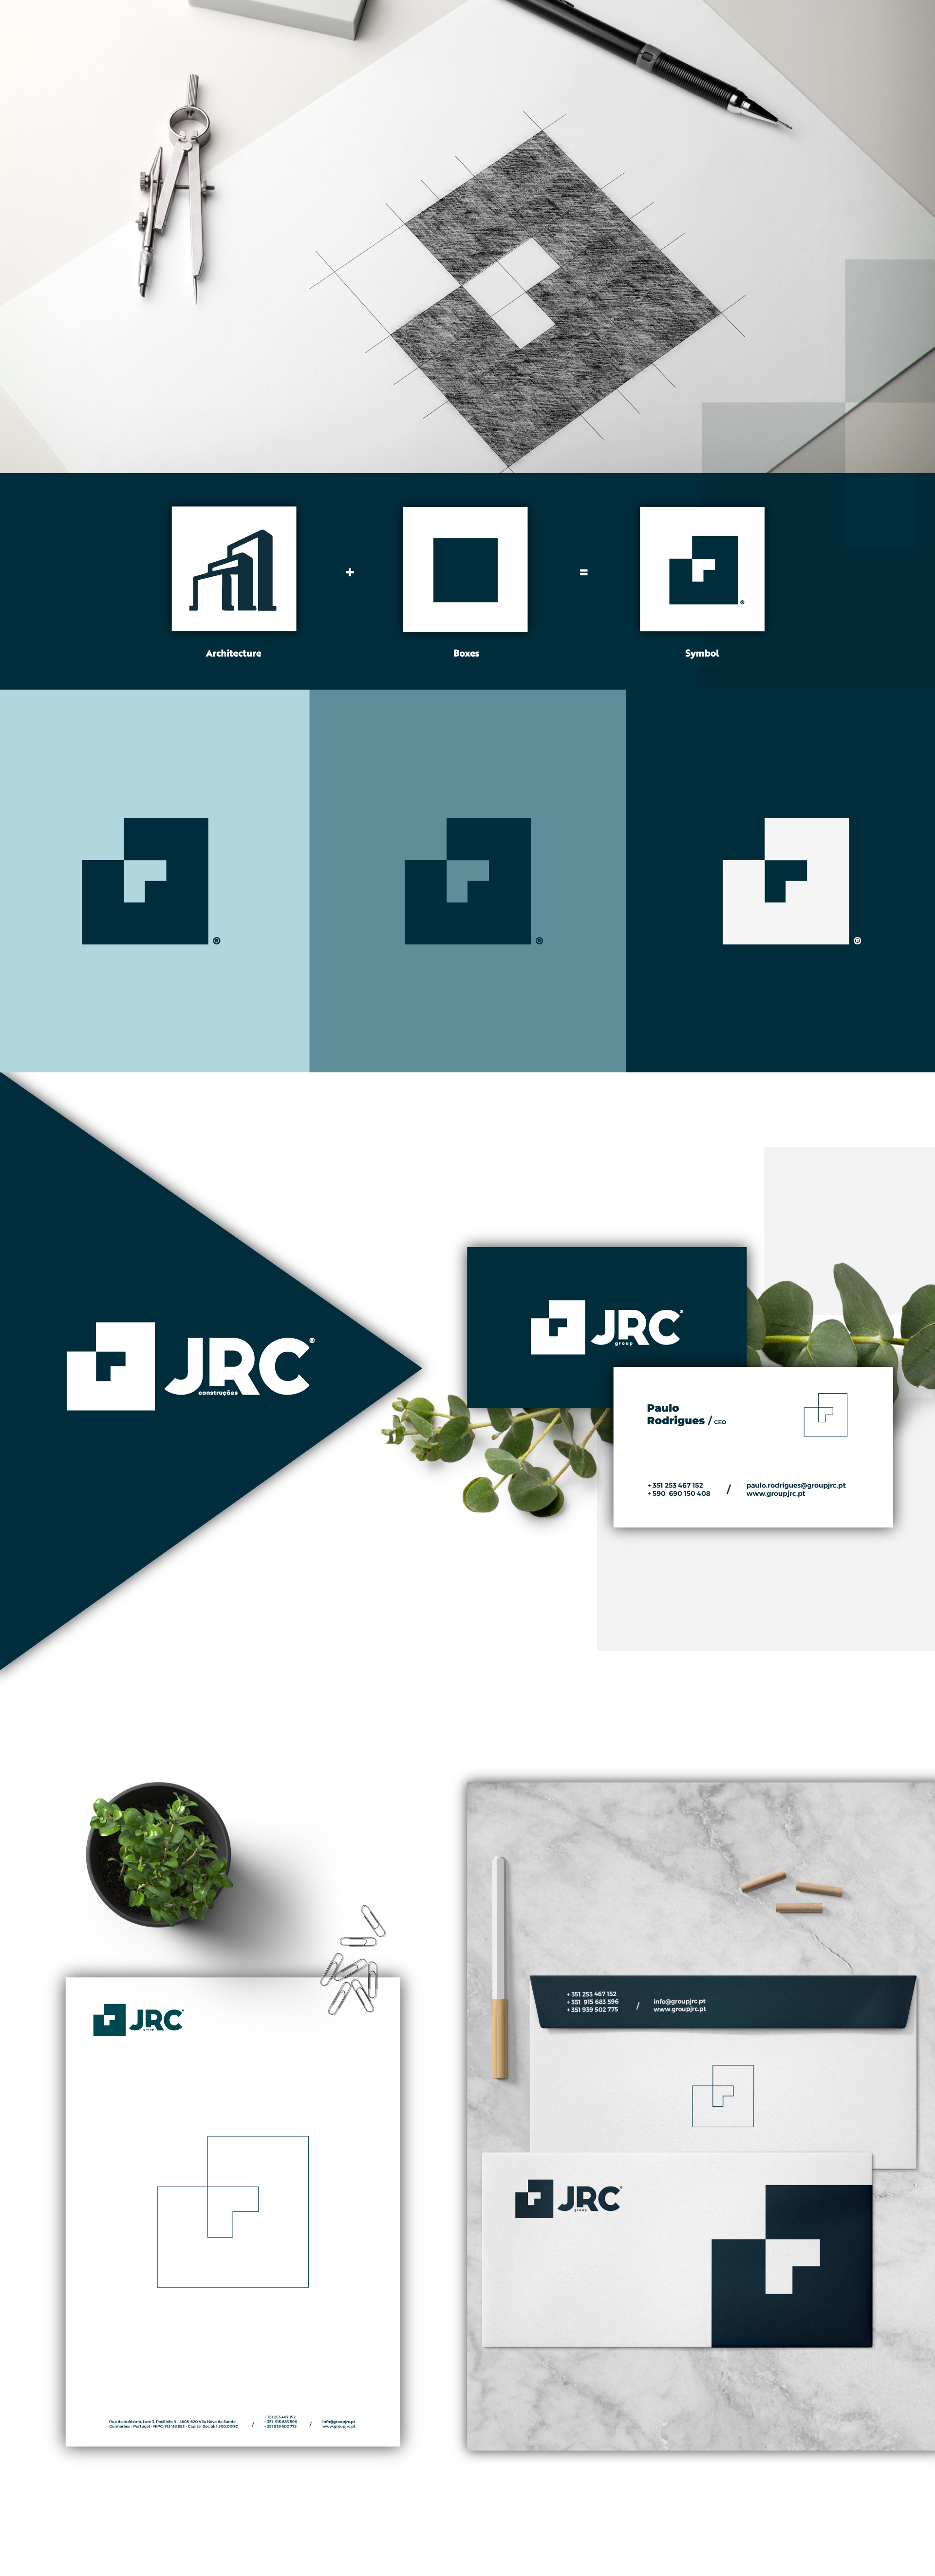 Group JRC branding